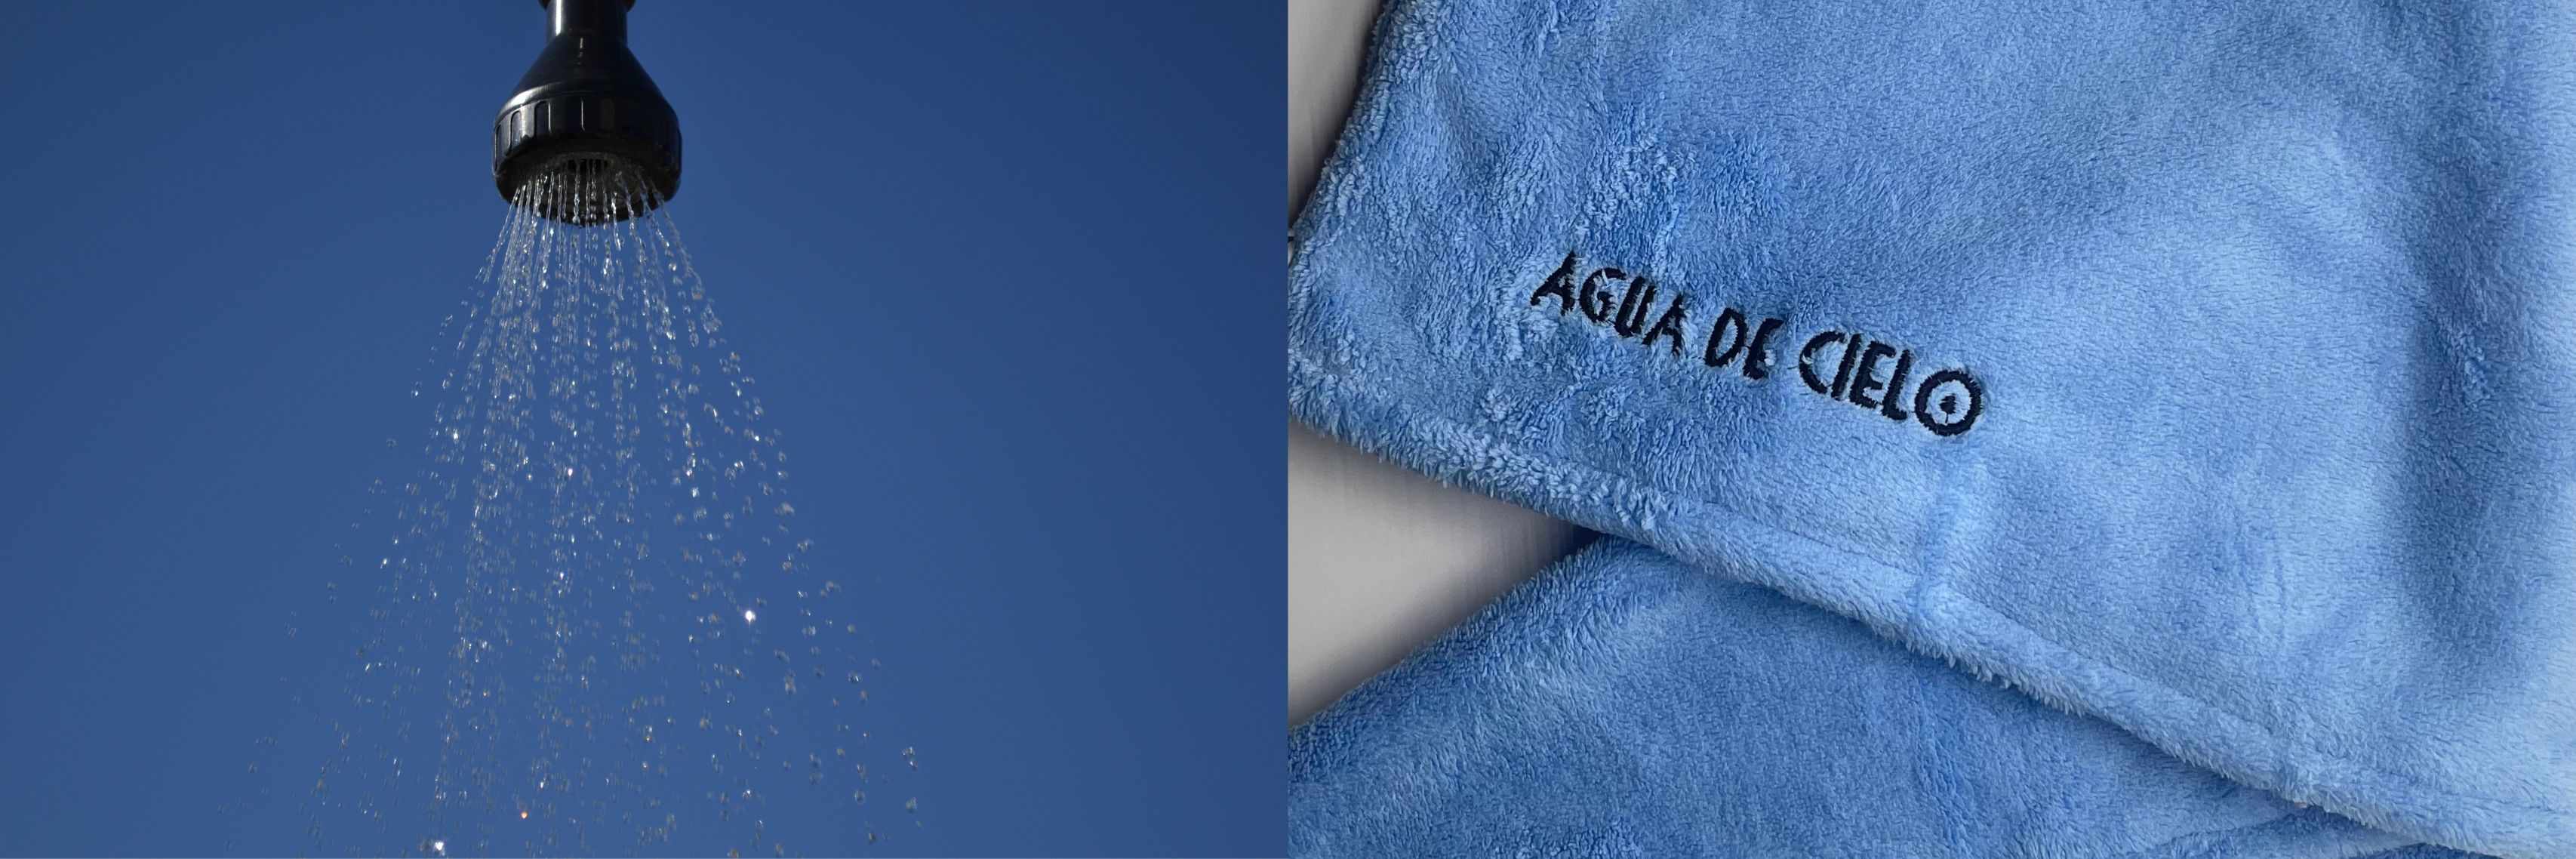 microfiber hair towel by agua de cielo